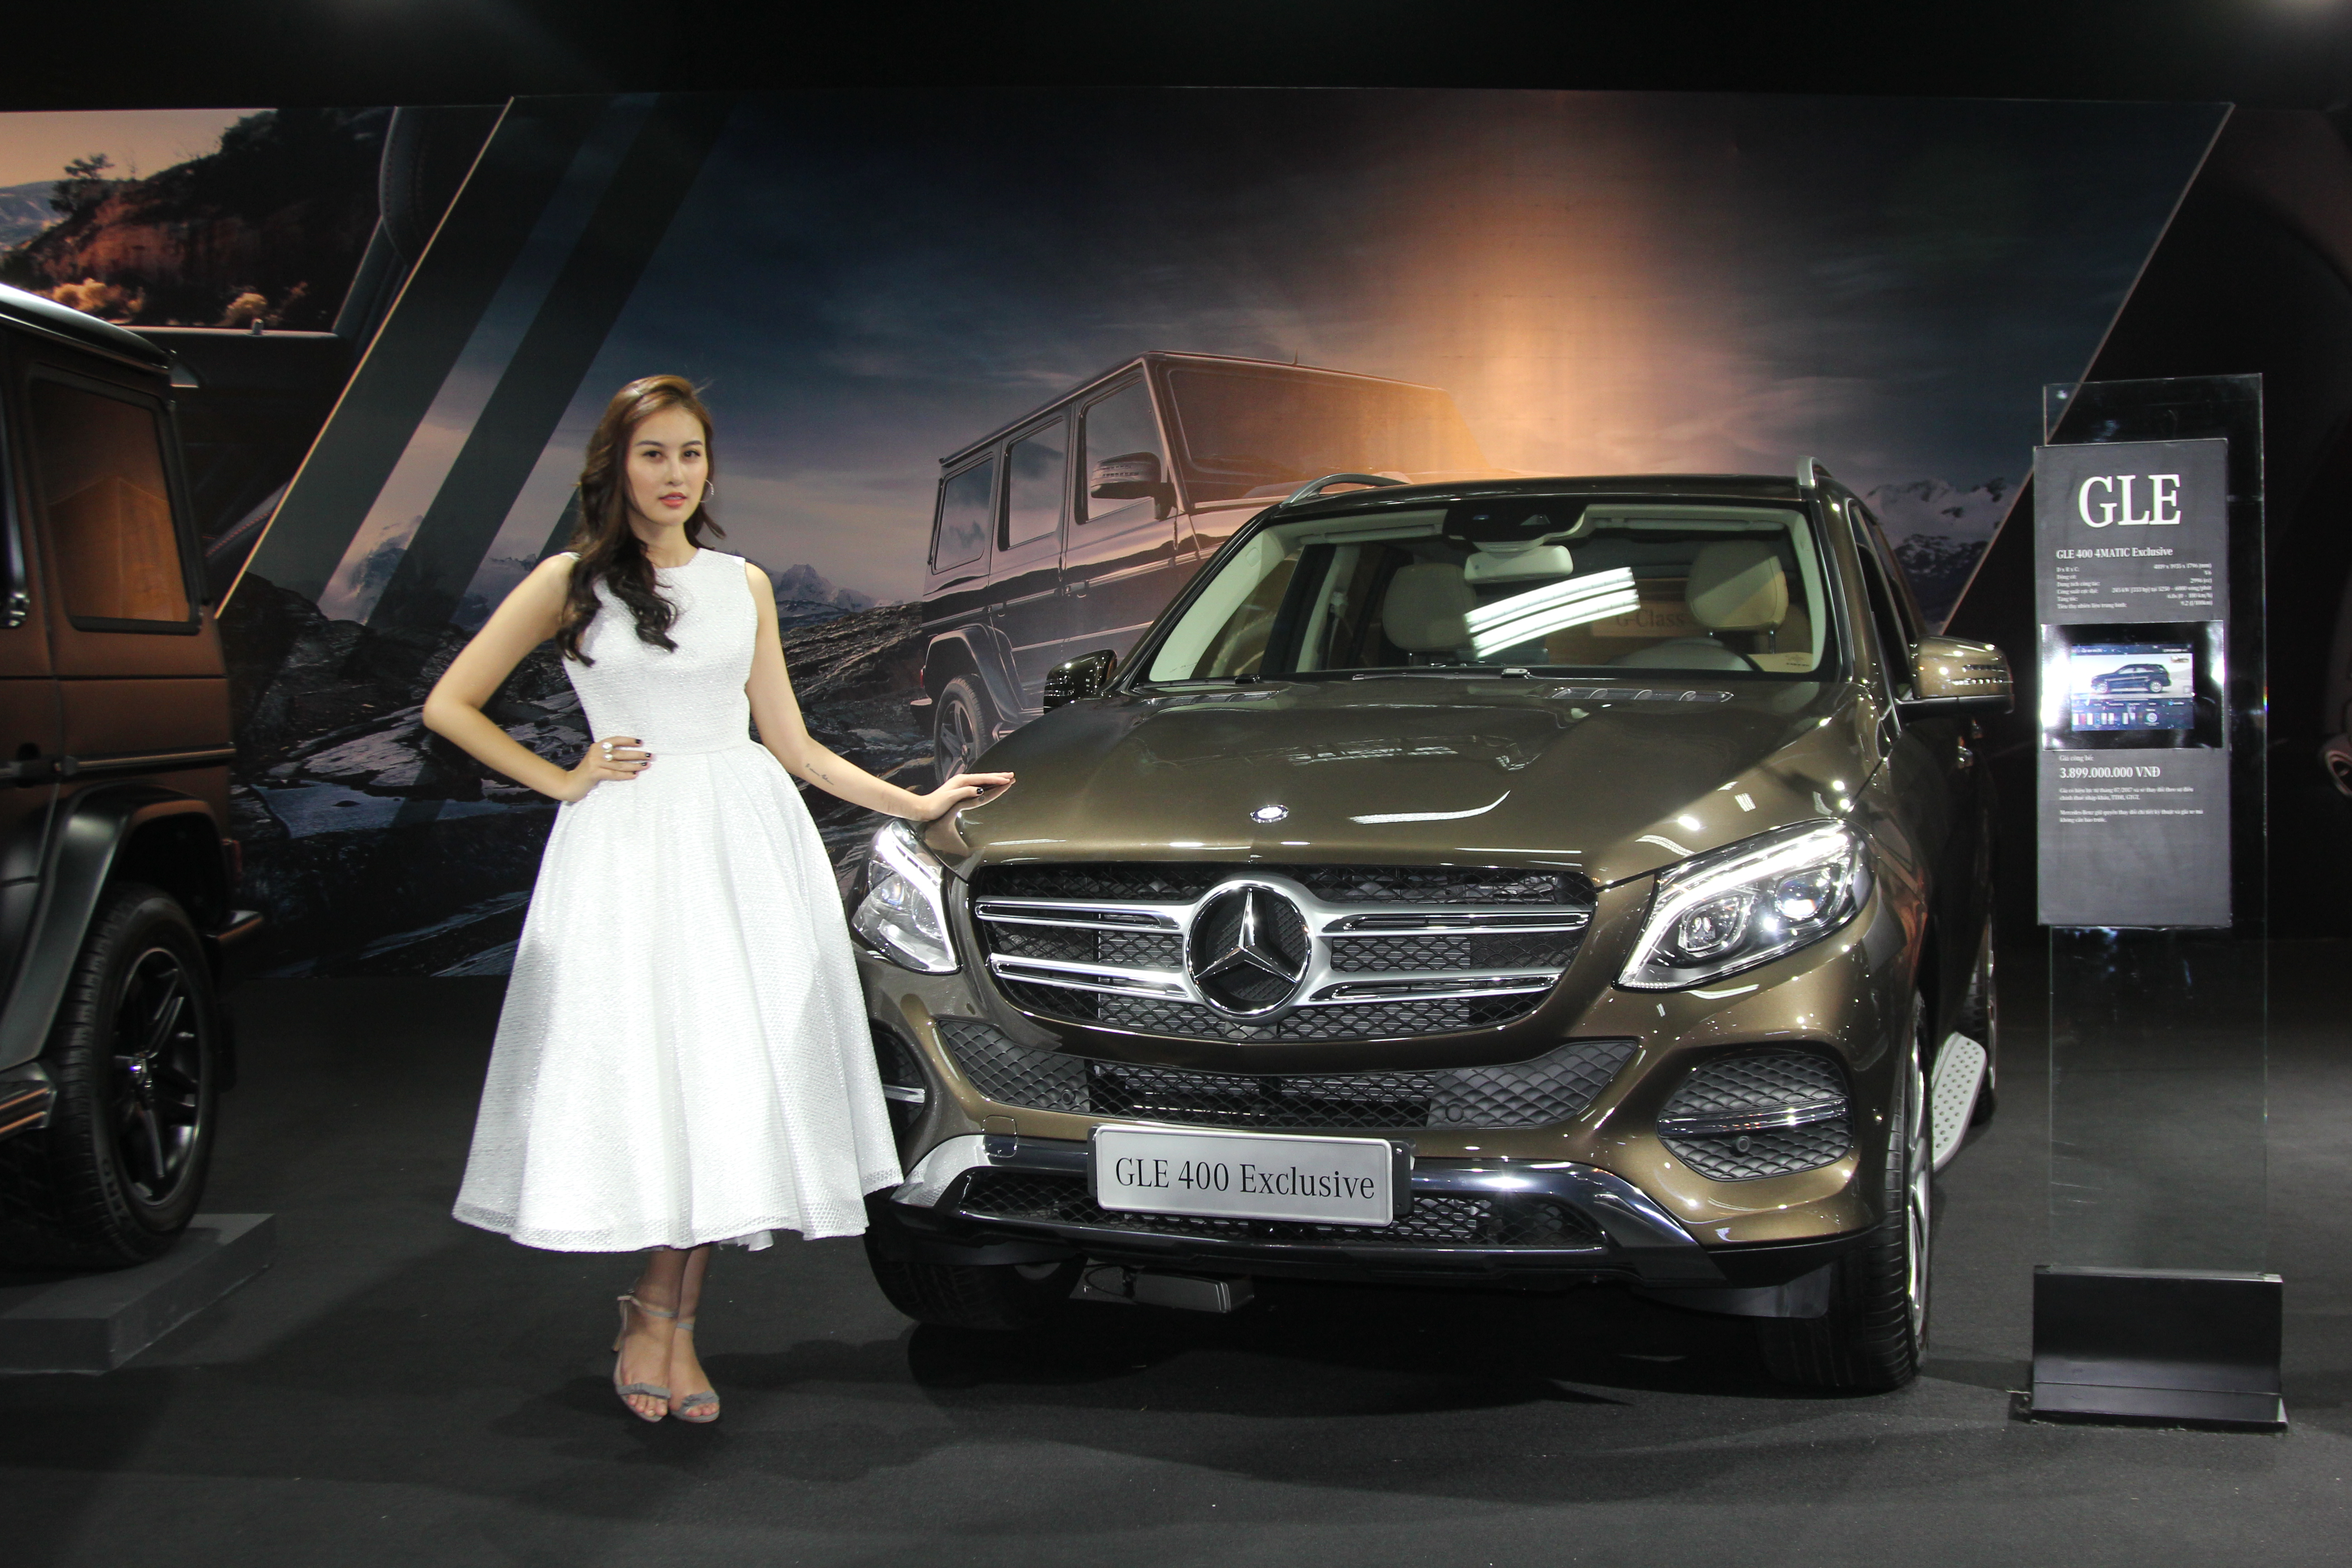 Mercedes-Benz-lap-ky-luc-ban-xe-sau-22-nam-kinh-doanh-tai-Viet-Nam-anh-1